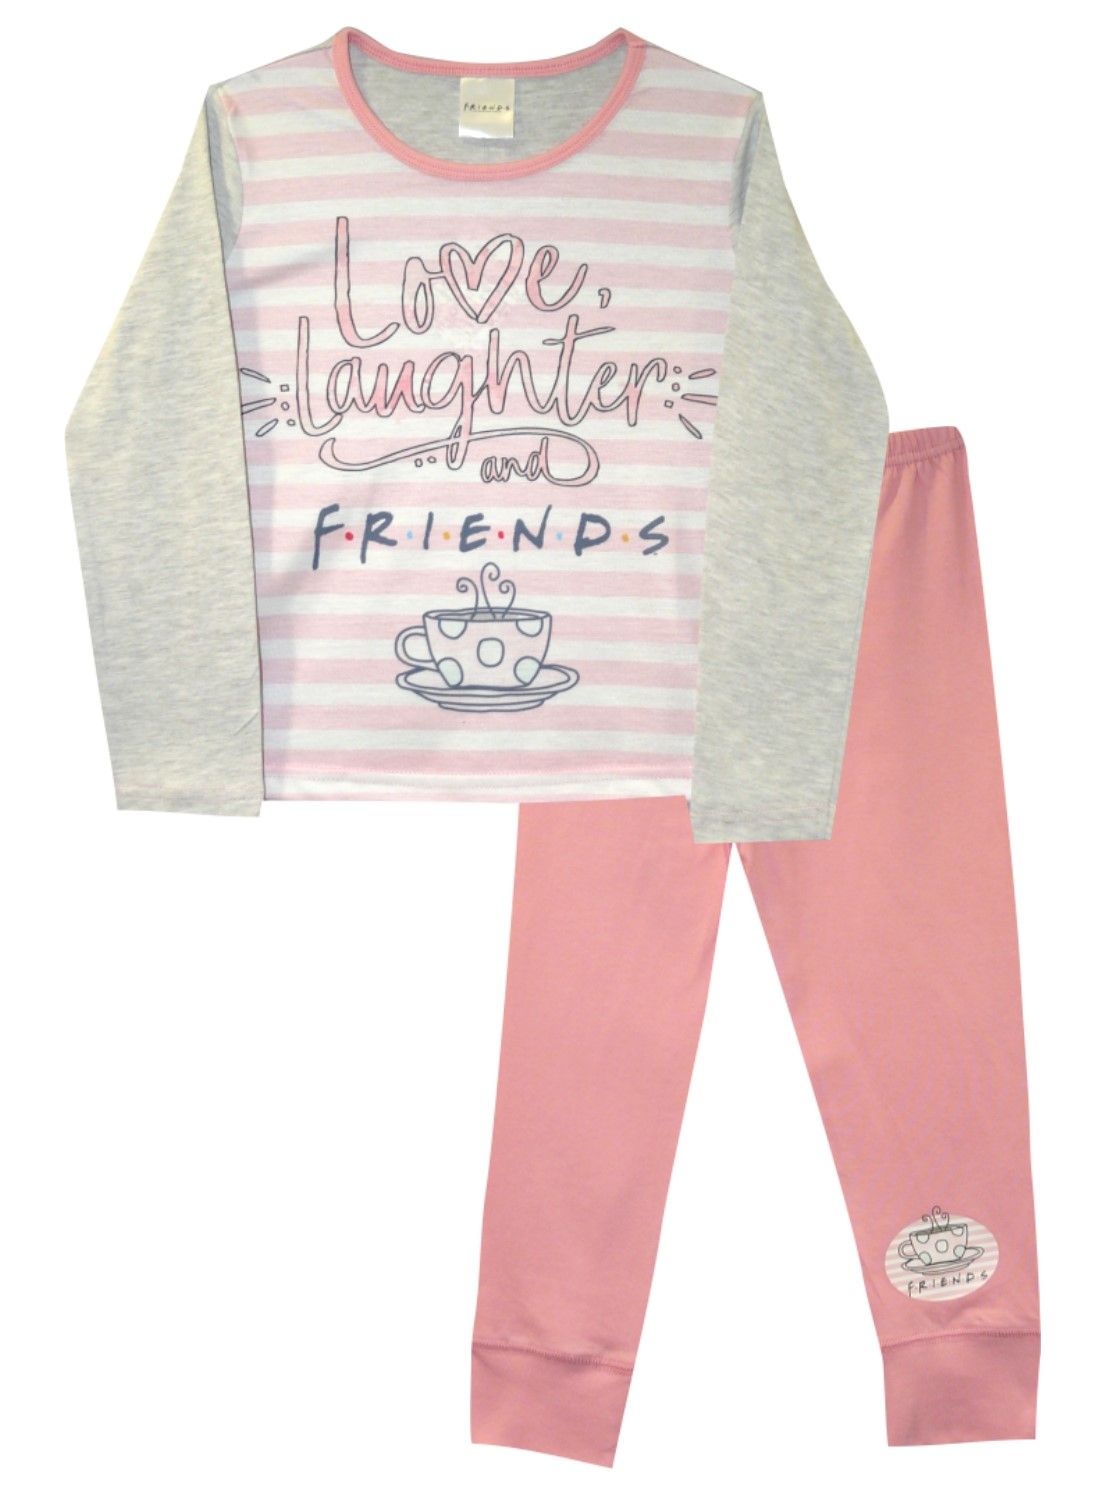 Friends "Love, Laughter" Girl's Pyjamas